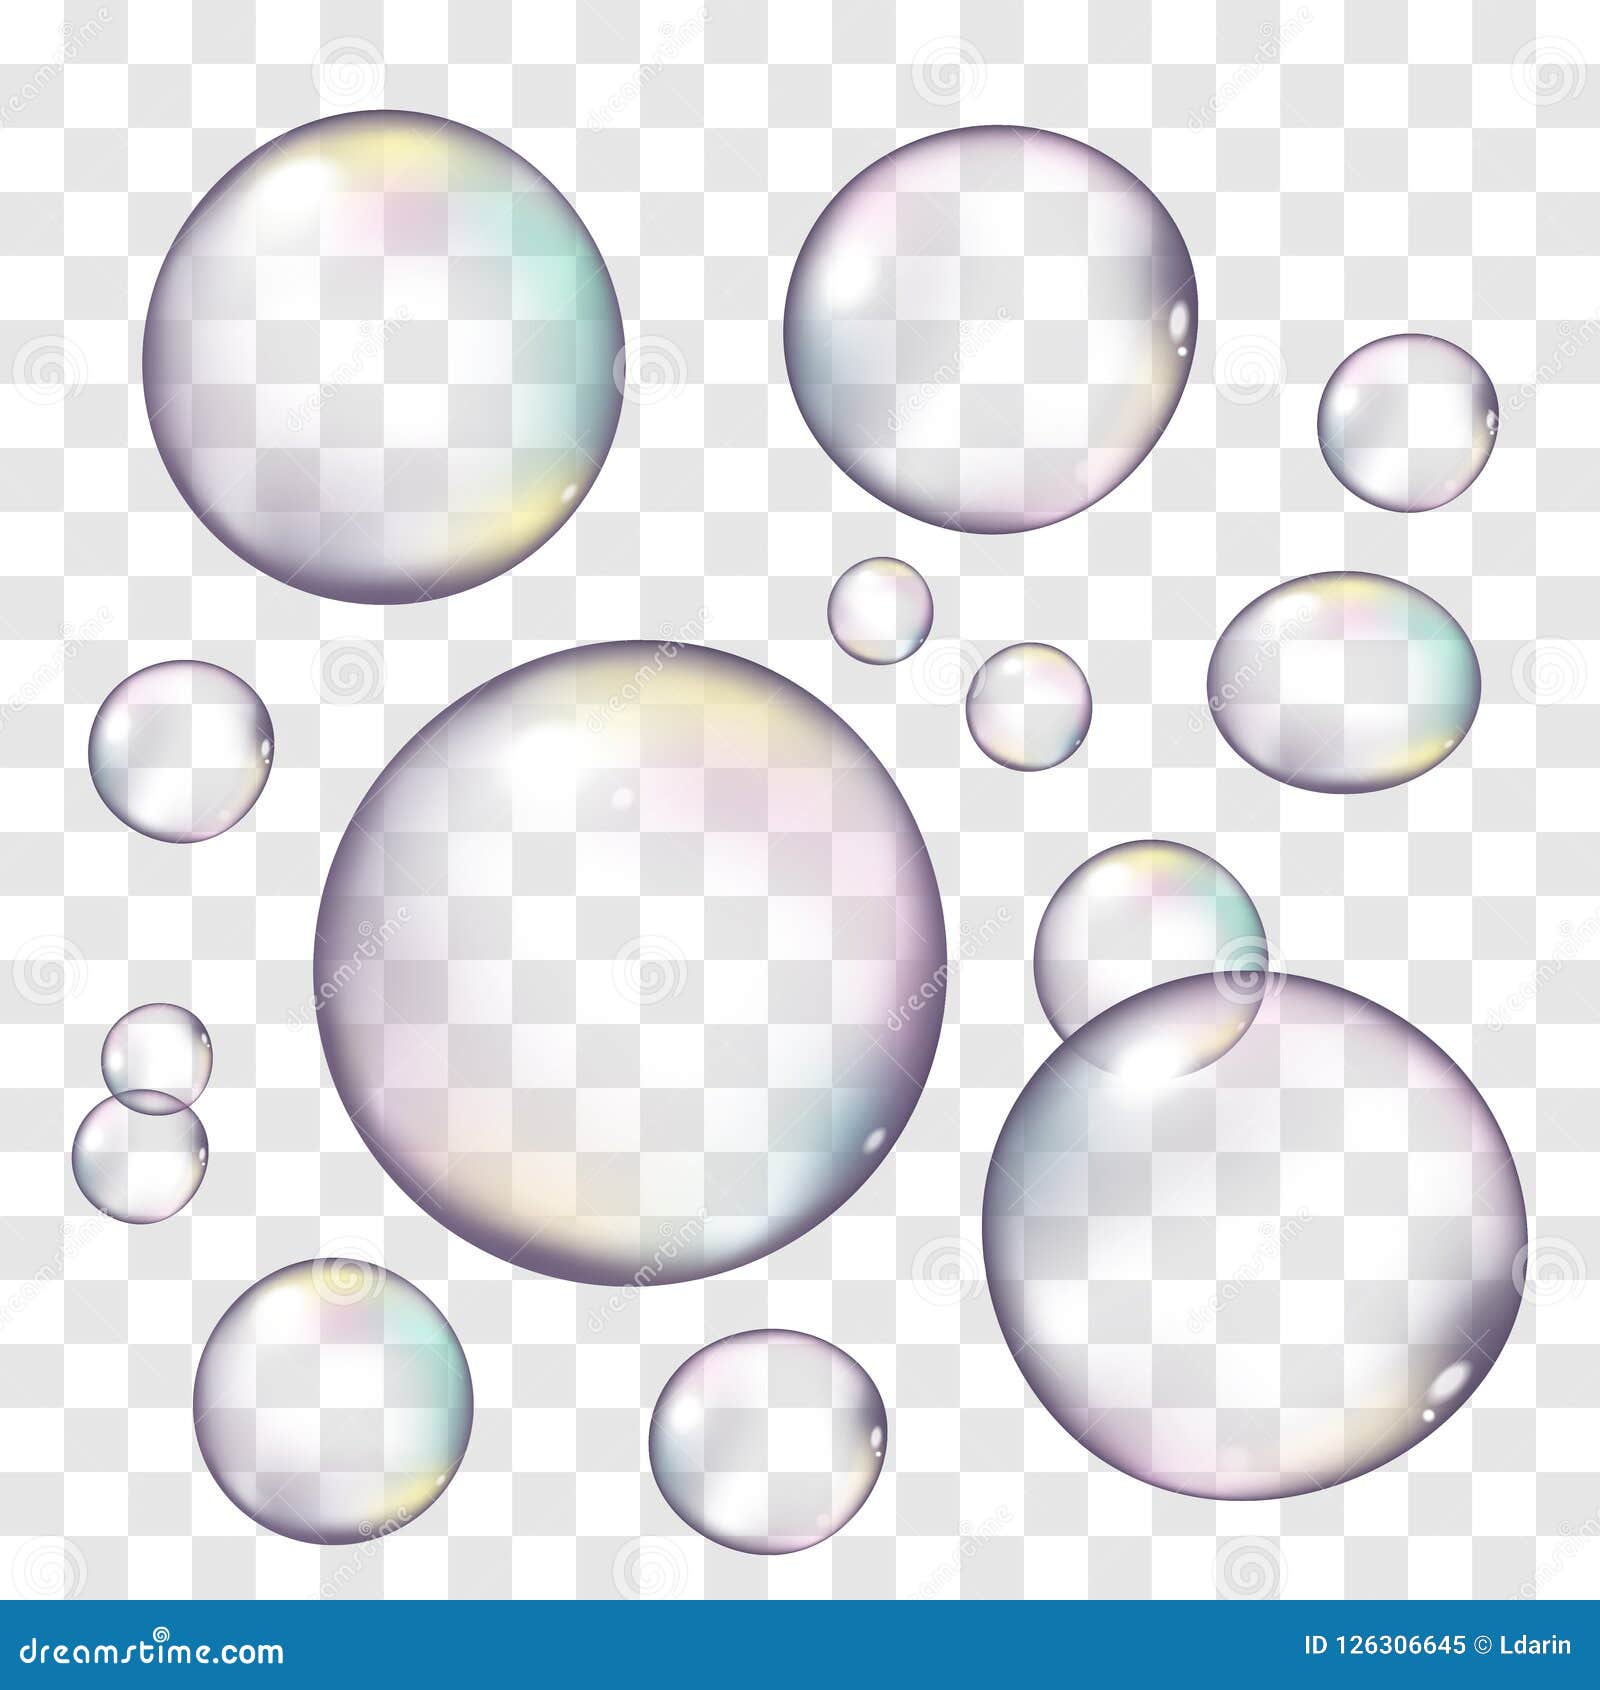 Soap Bubbles On Transparent Background Cartoon Vector | CartoonDealer ...